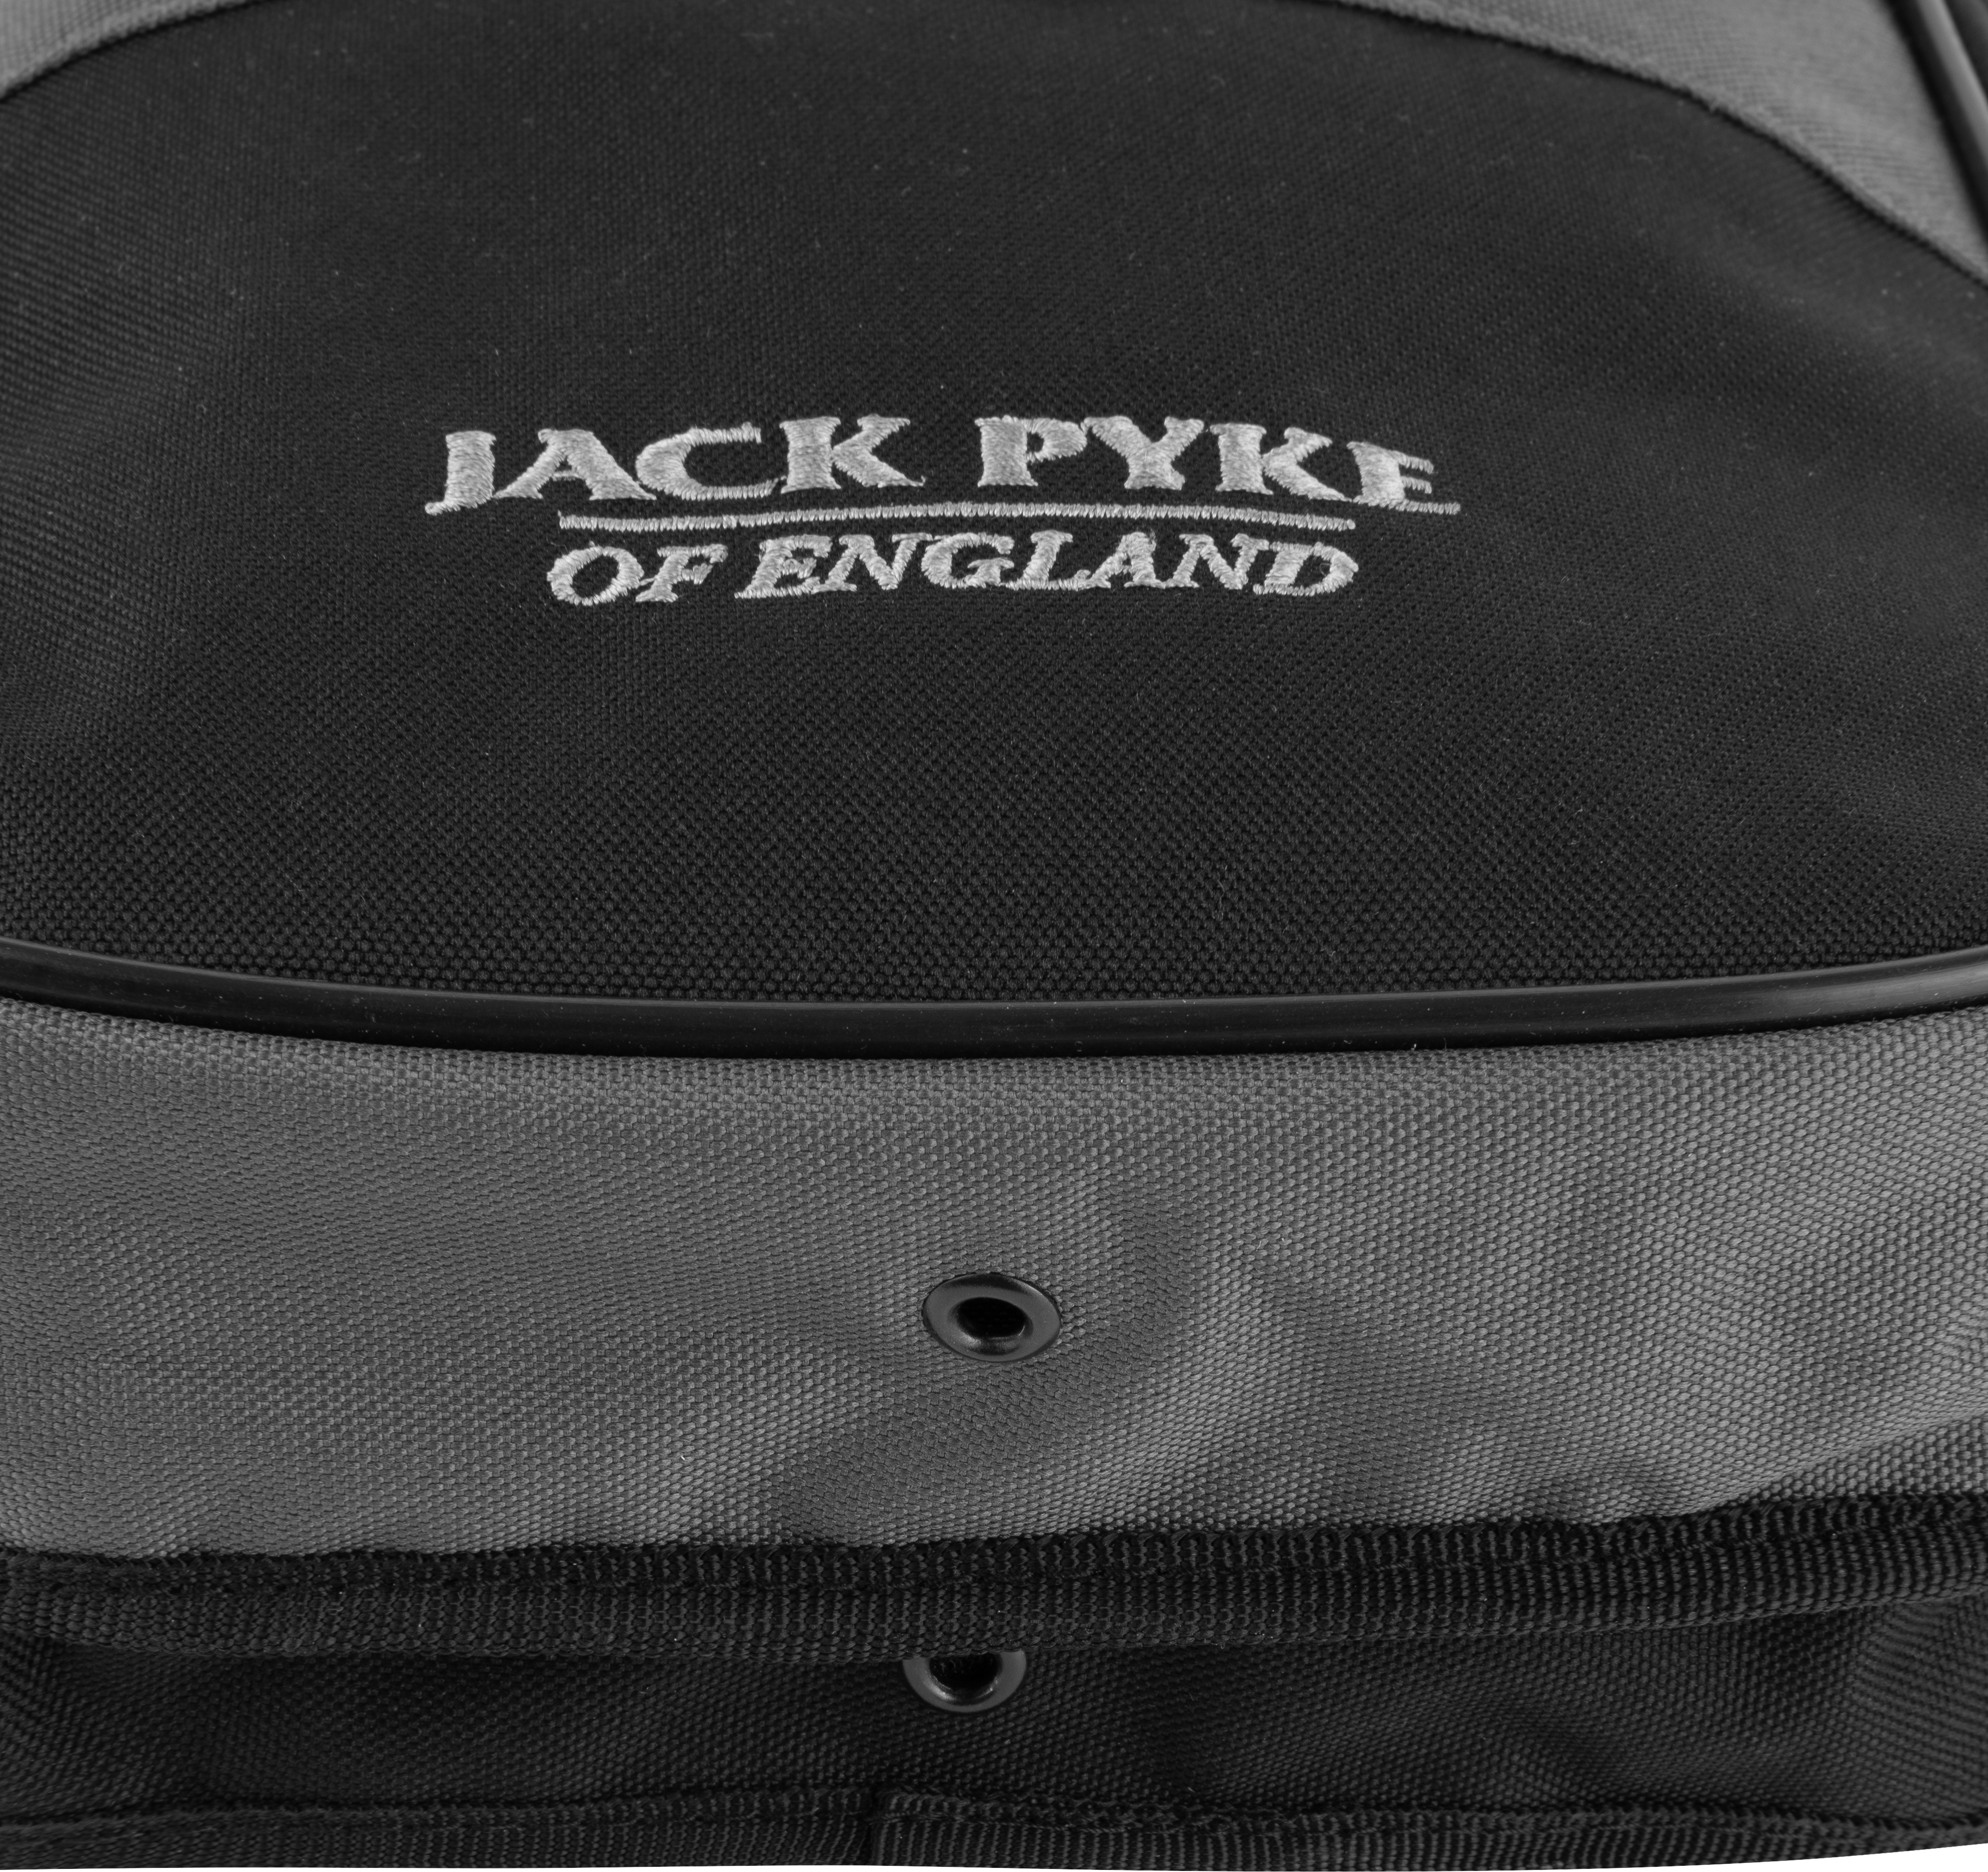 Jack Pyke Sporting Cartridge Pouch in Black 